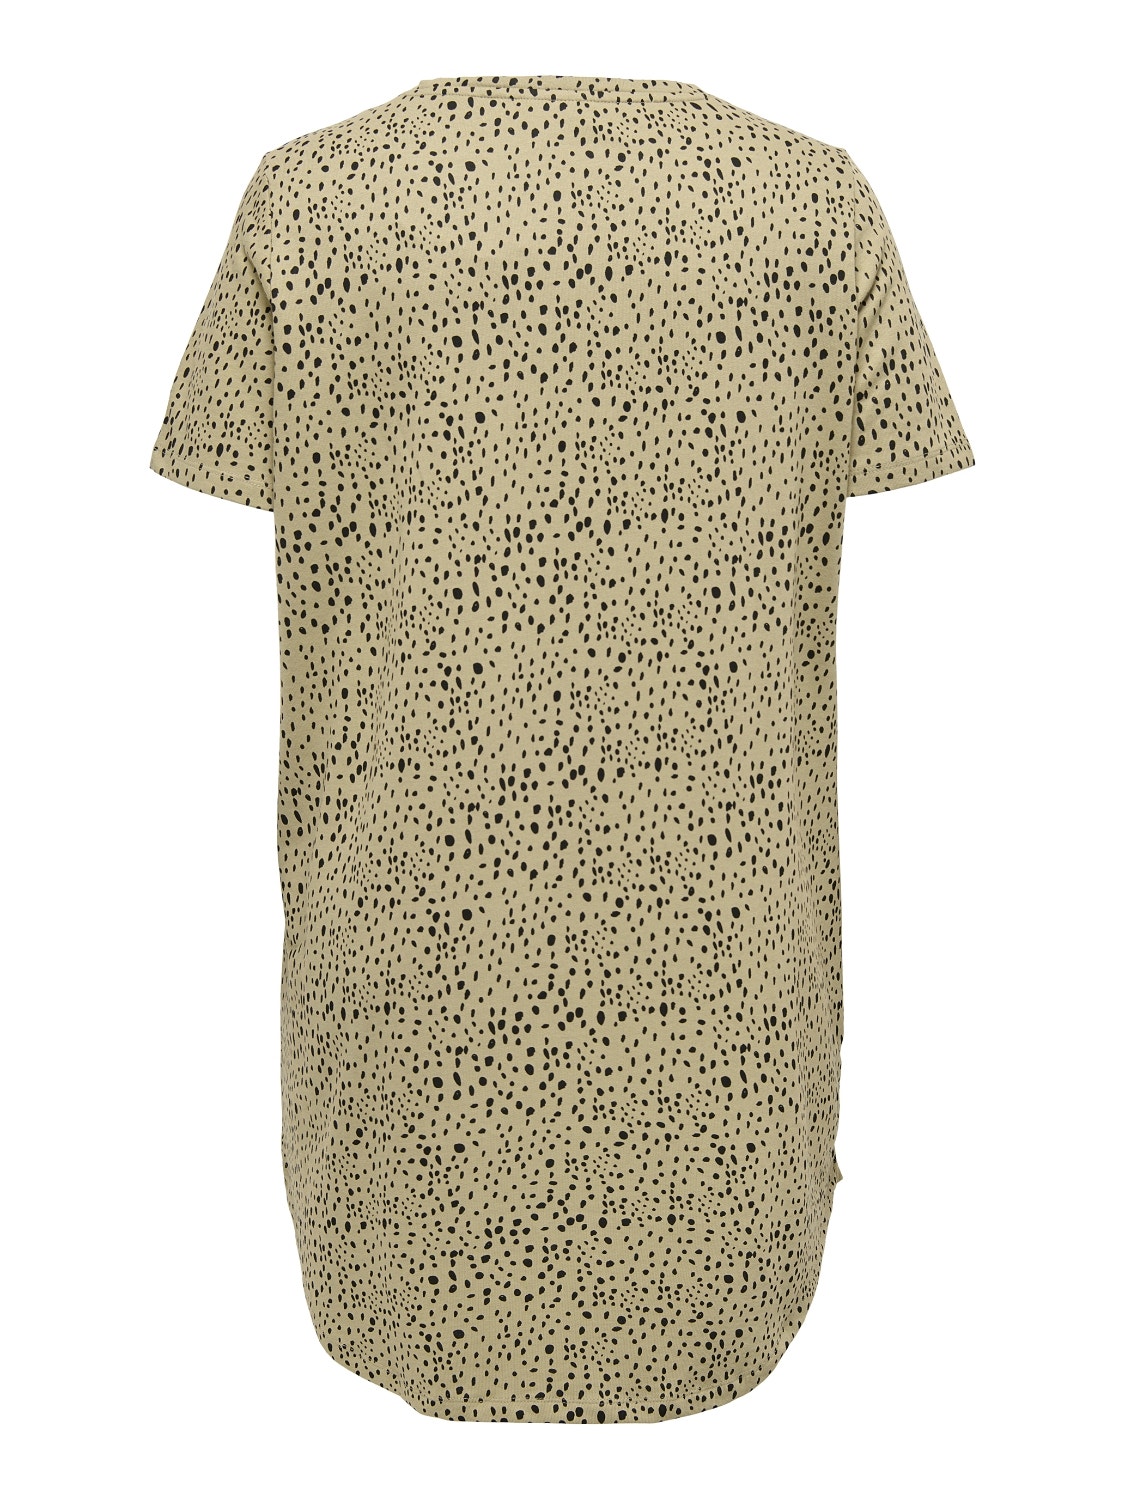 ONLY Curvy printed Dress -Tannin - 15242528